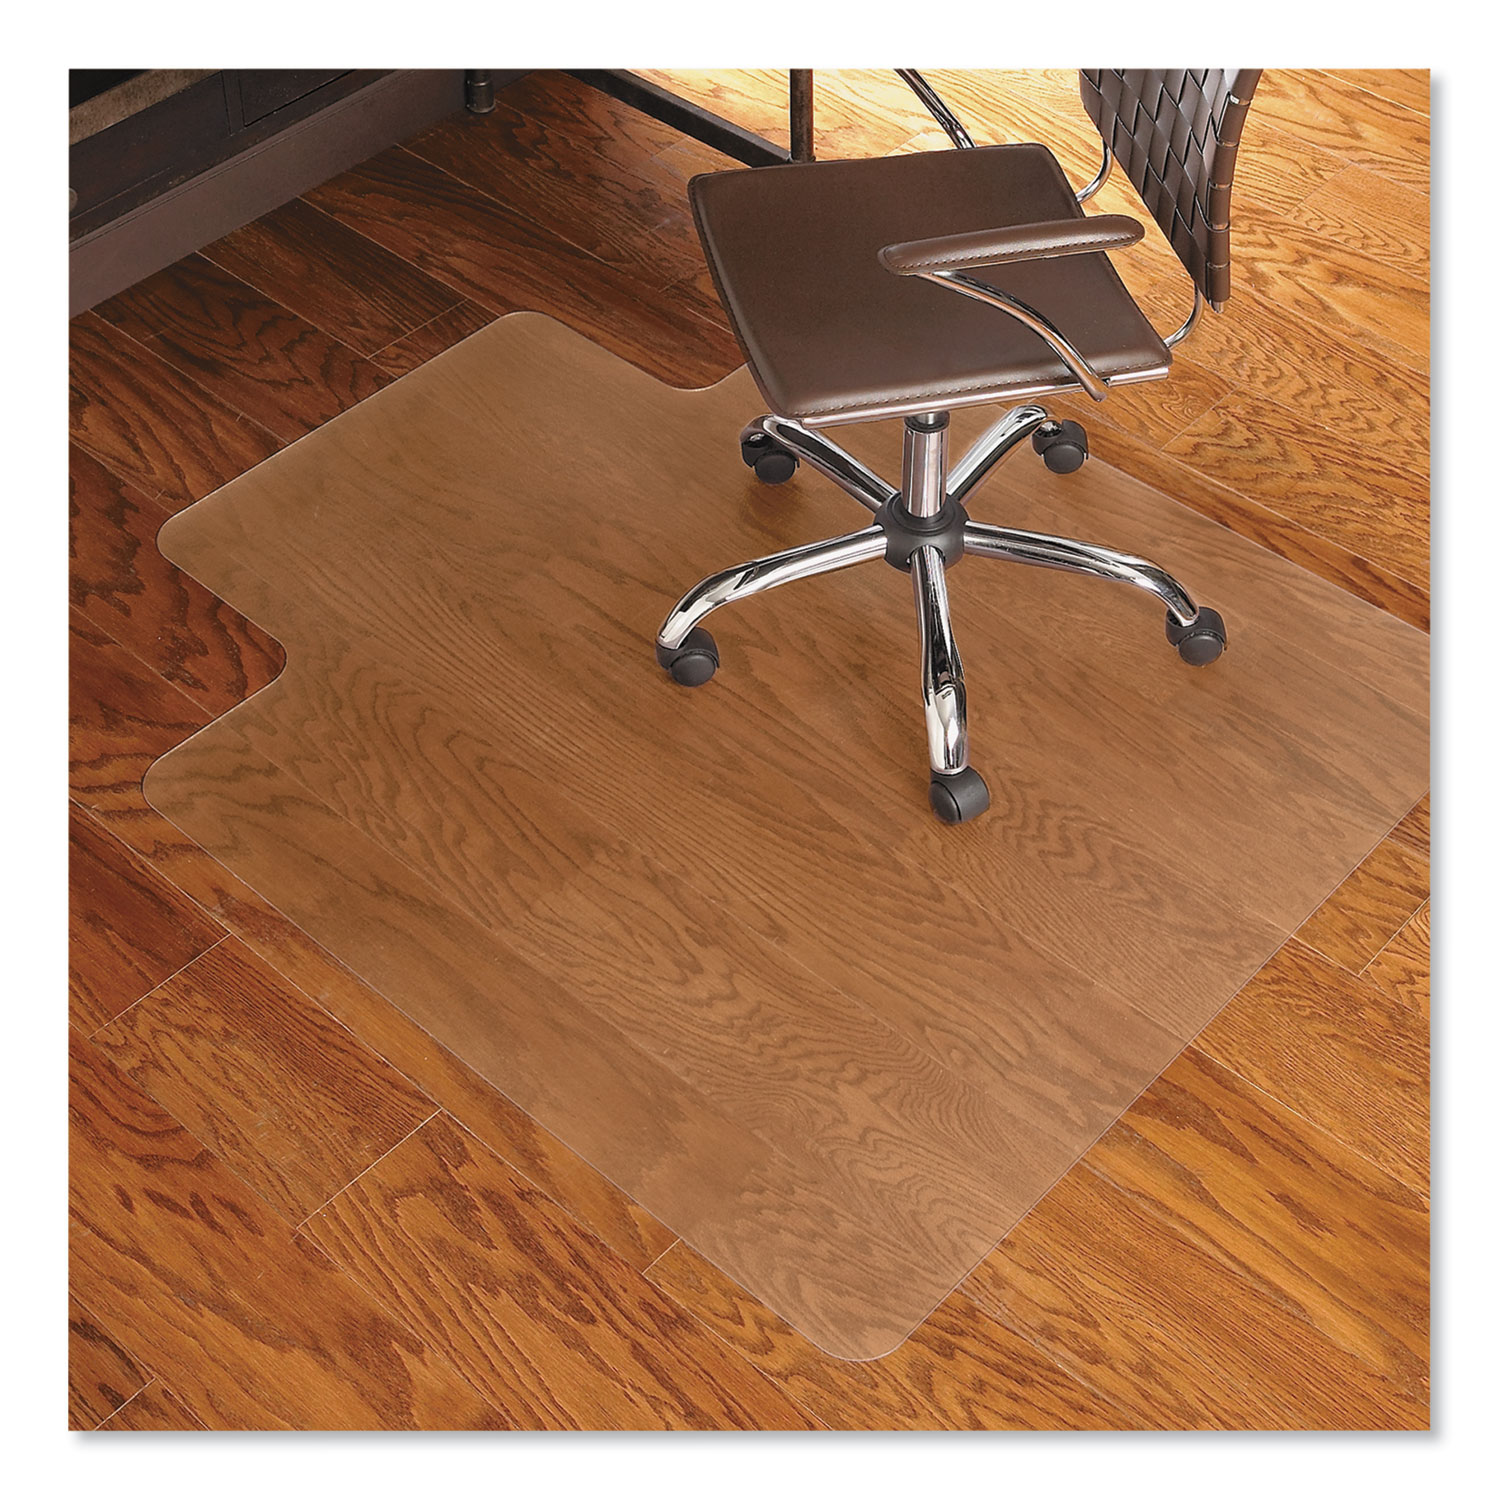 Everlife Chair Mat Medium Pile Carpet Clear